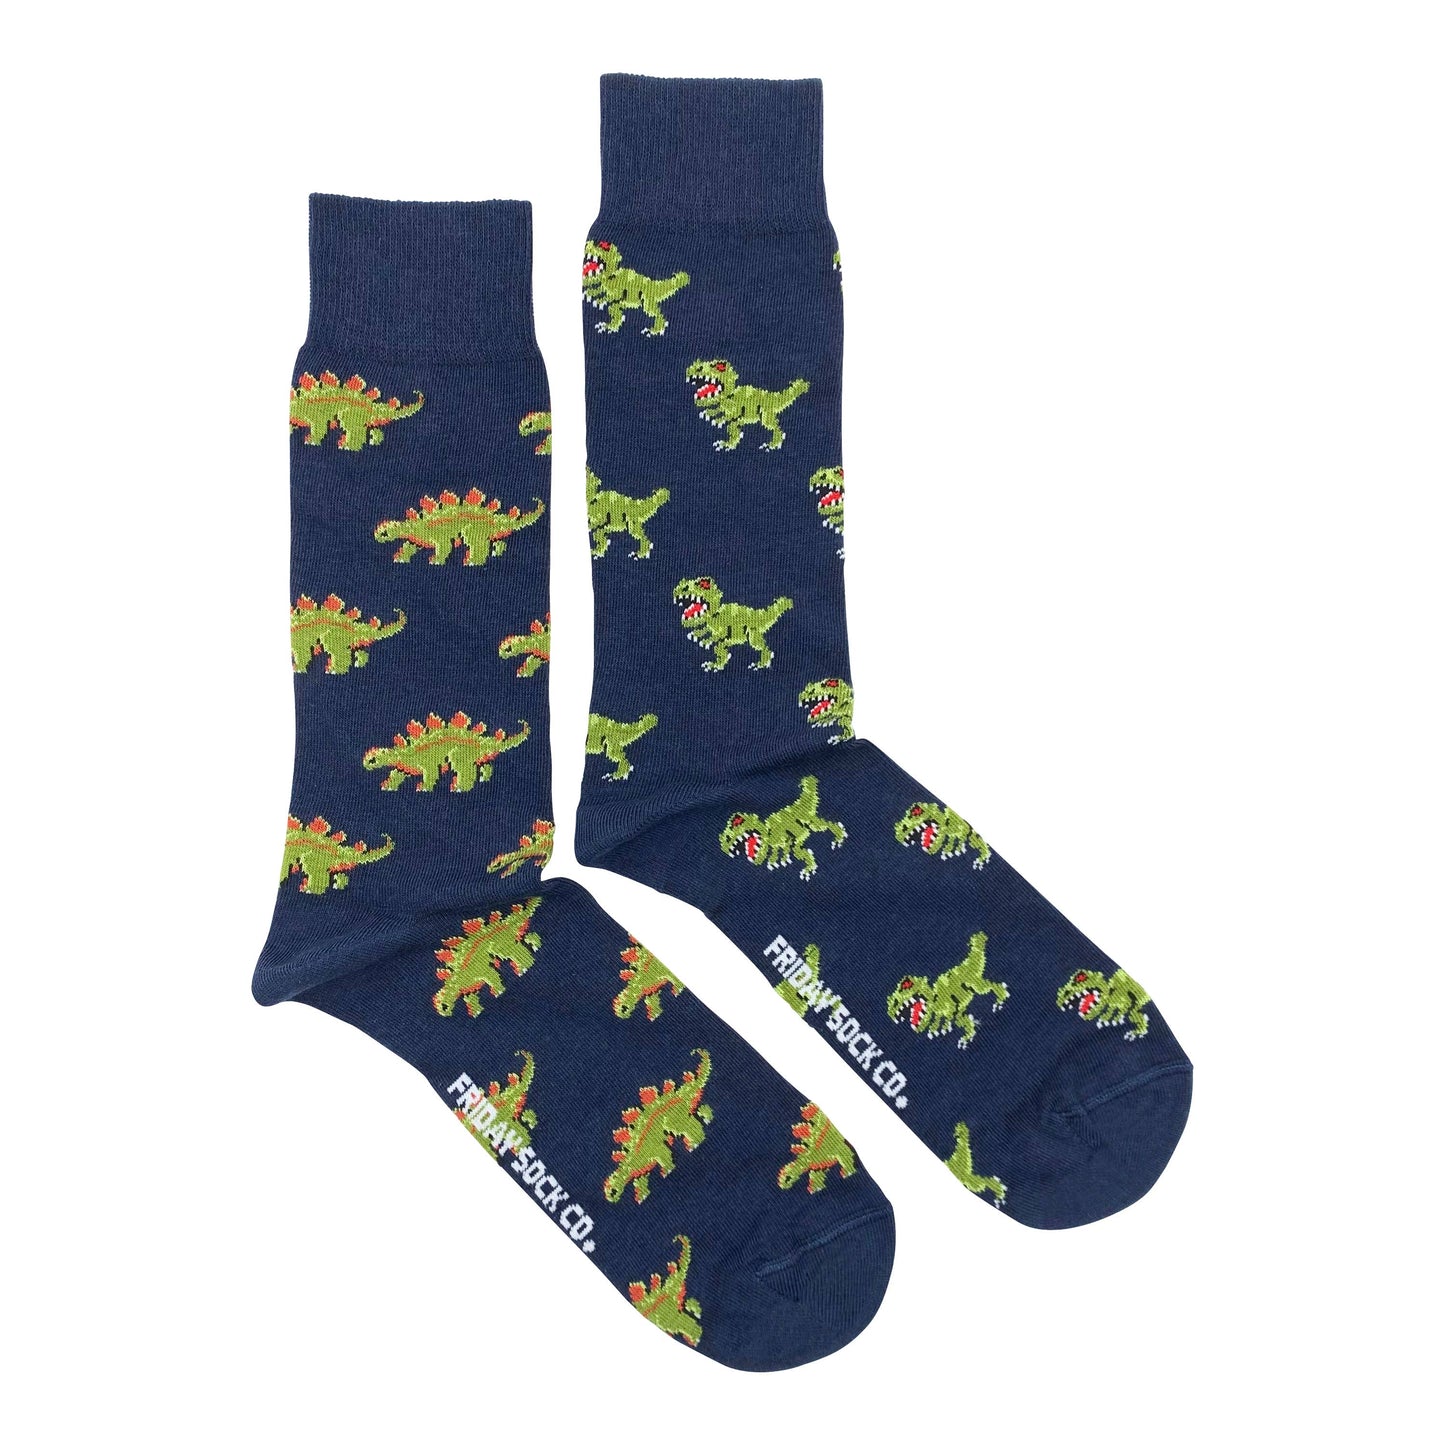 Men's Socks | Green Dinosaurs | Mismatched Socks